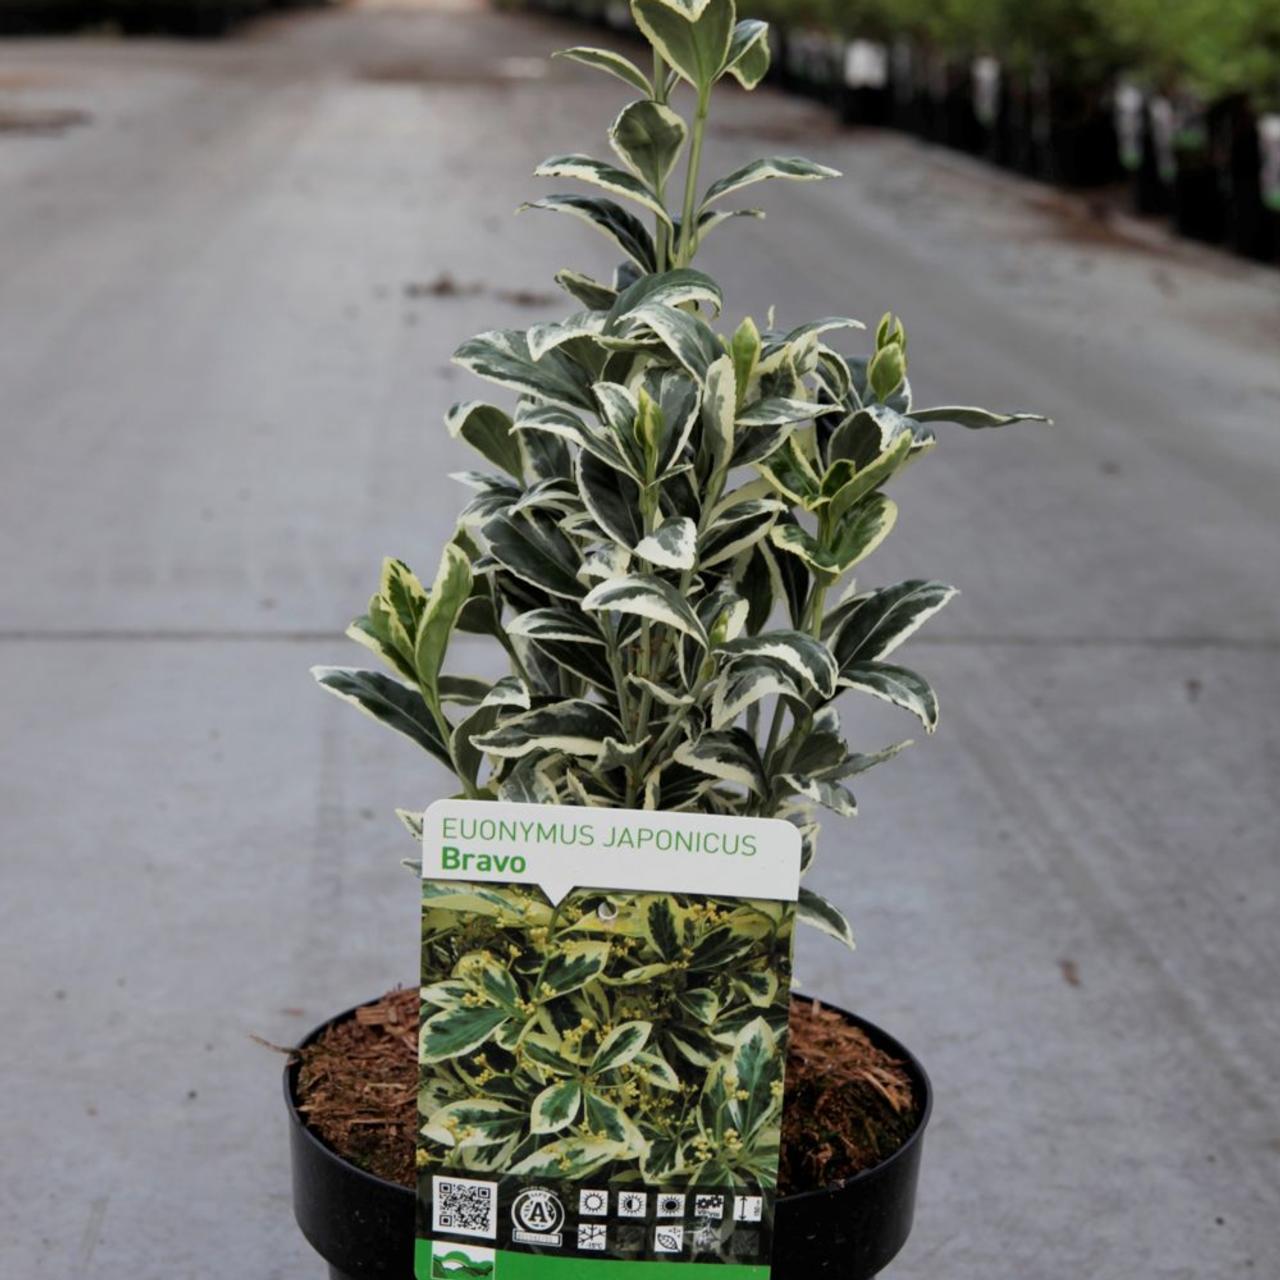 Euonymus japonicus 'Bravo' plant